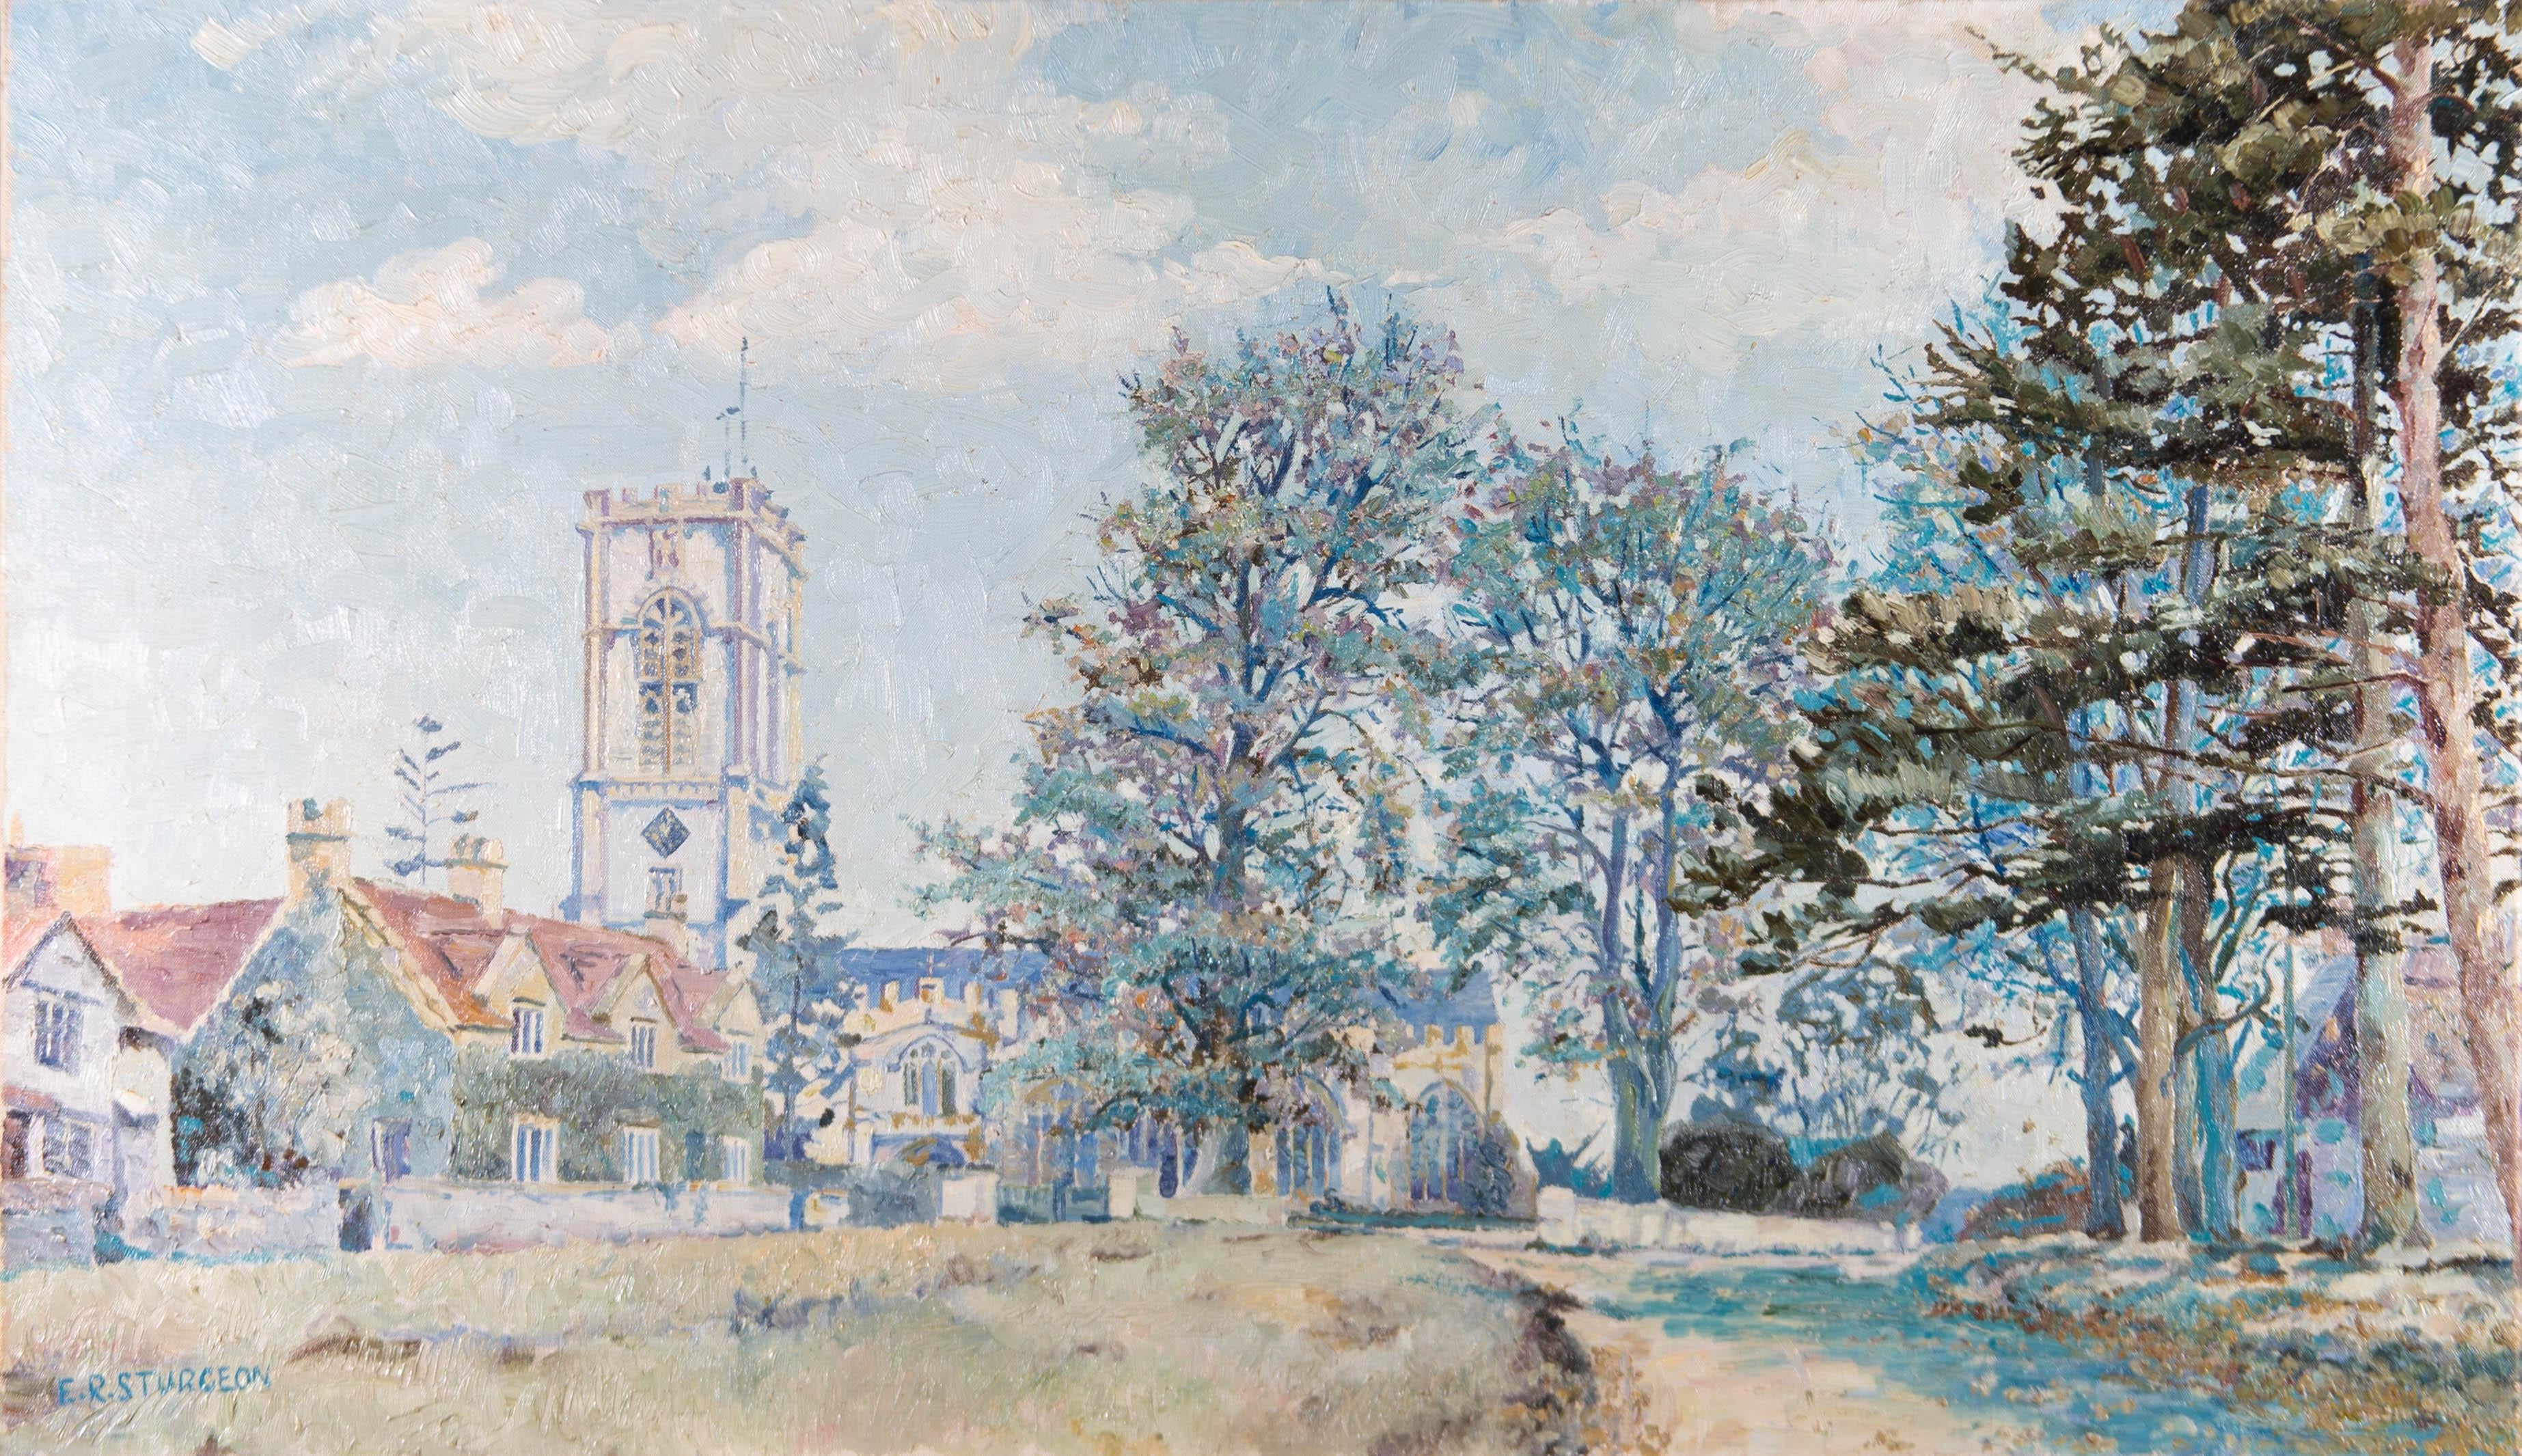 Unknown Landscape Painting - E. R. Sturgeon (1920-1999) - Mid 20th Century Oil, Impressionistic Church